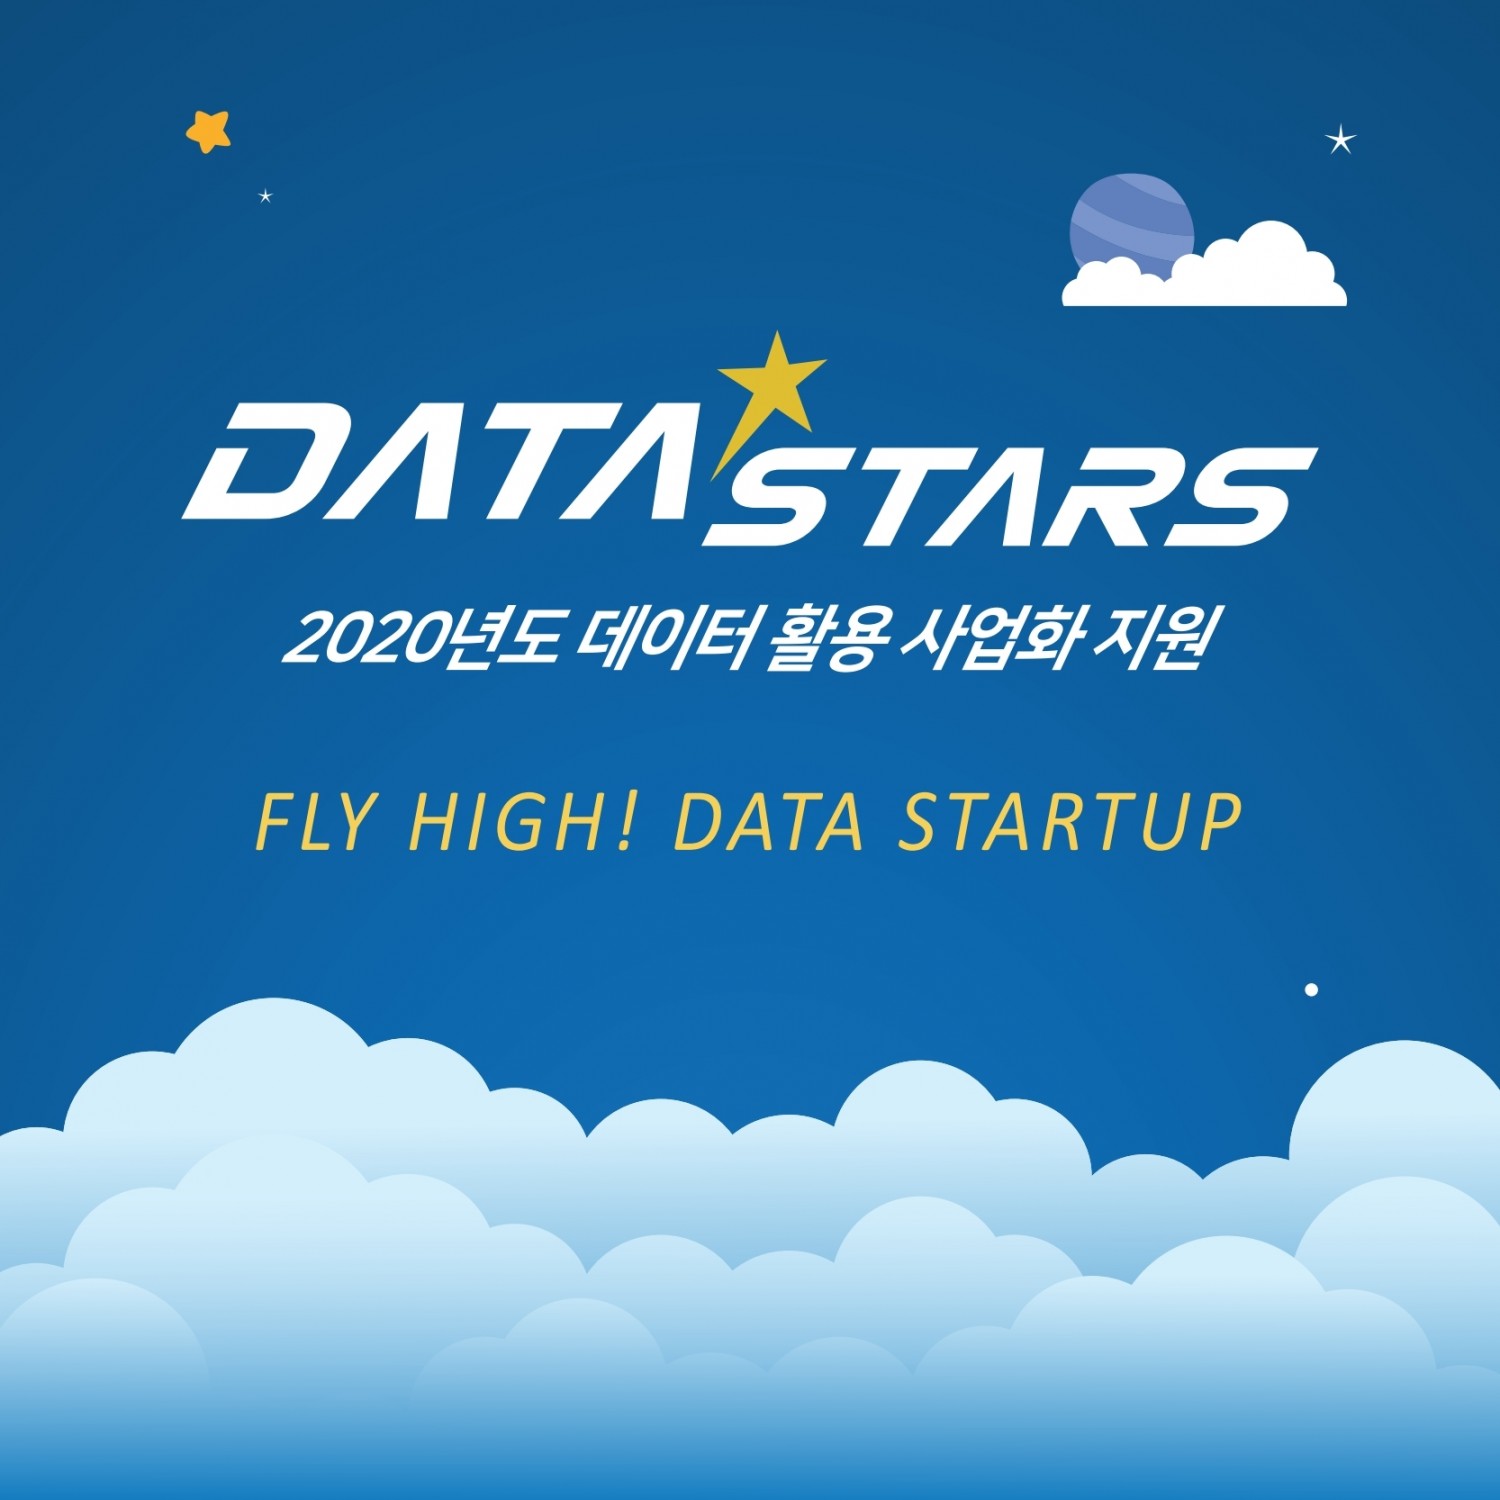 DATA STARS 2020년도 데이터 활용 사업화 지원 - FLY HIGH! DATA STARTUP